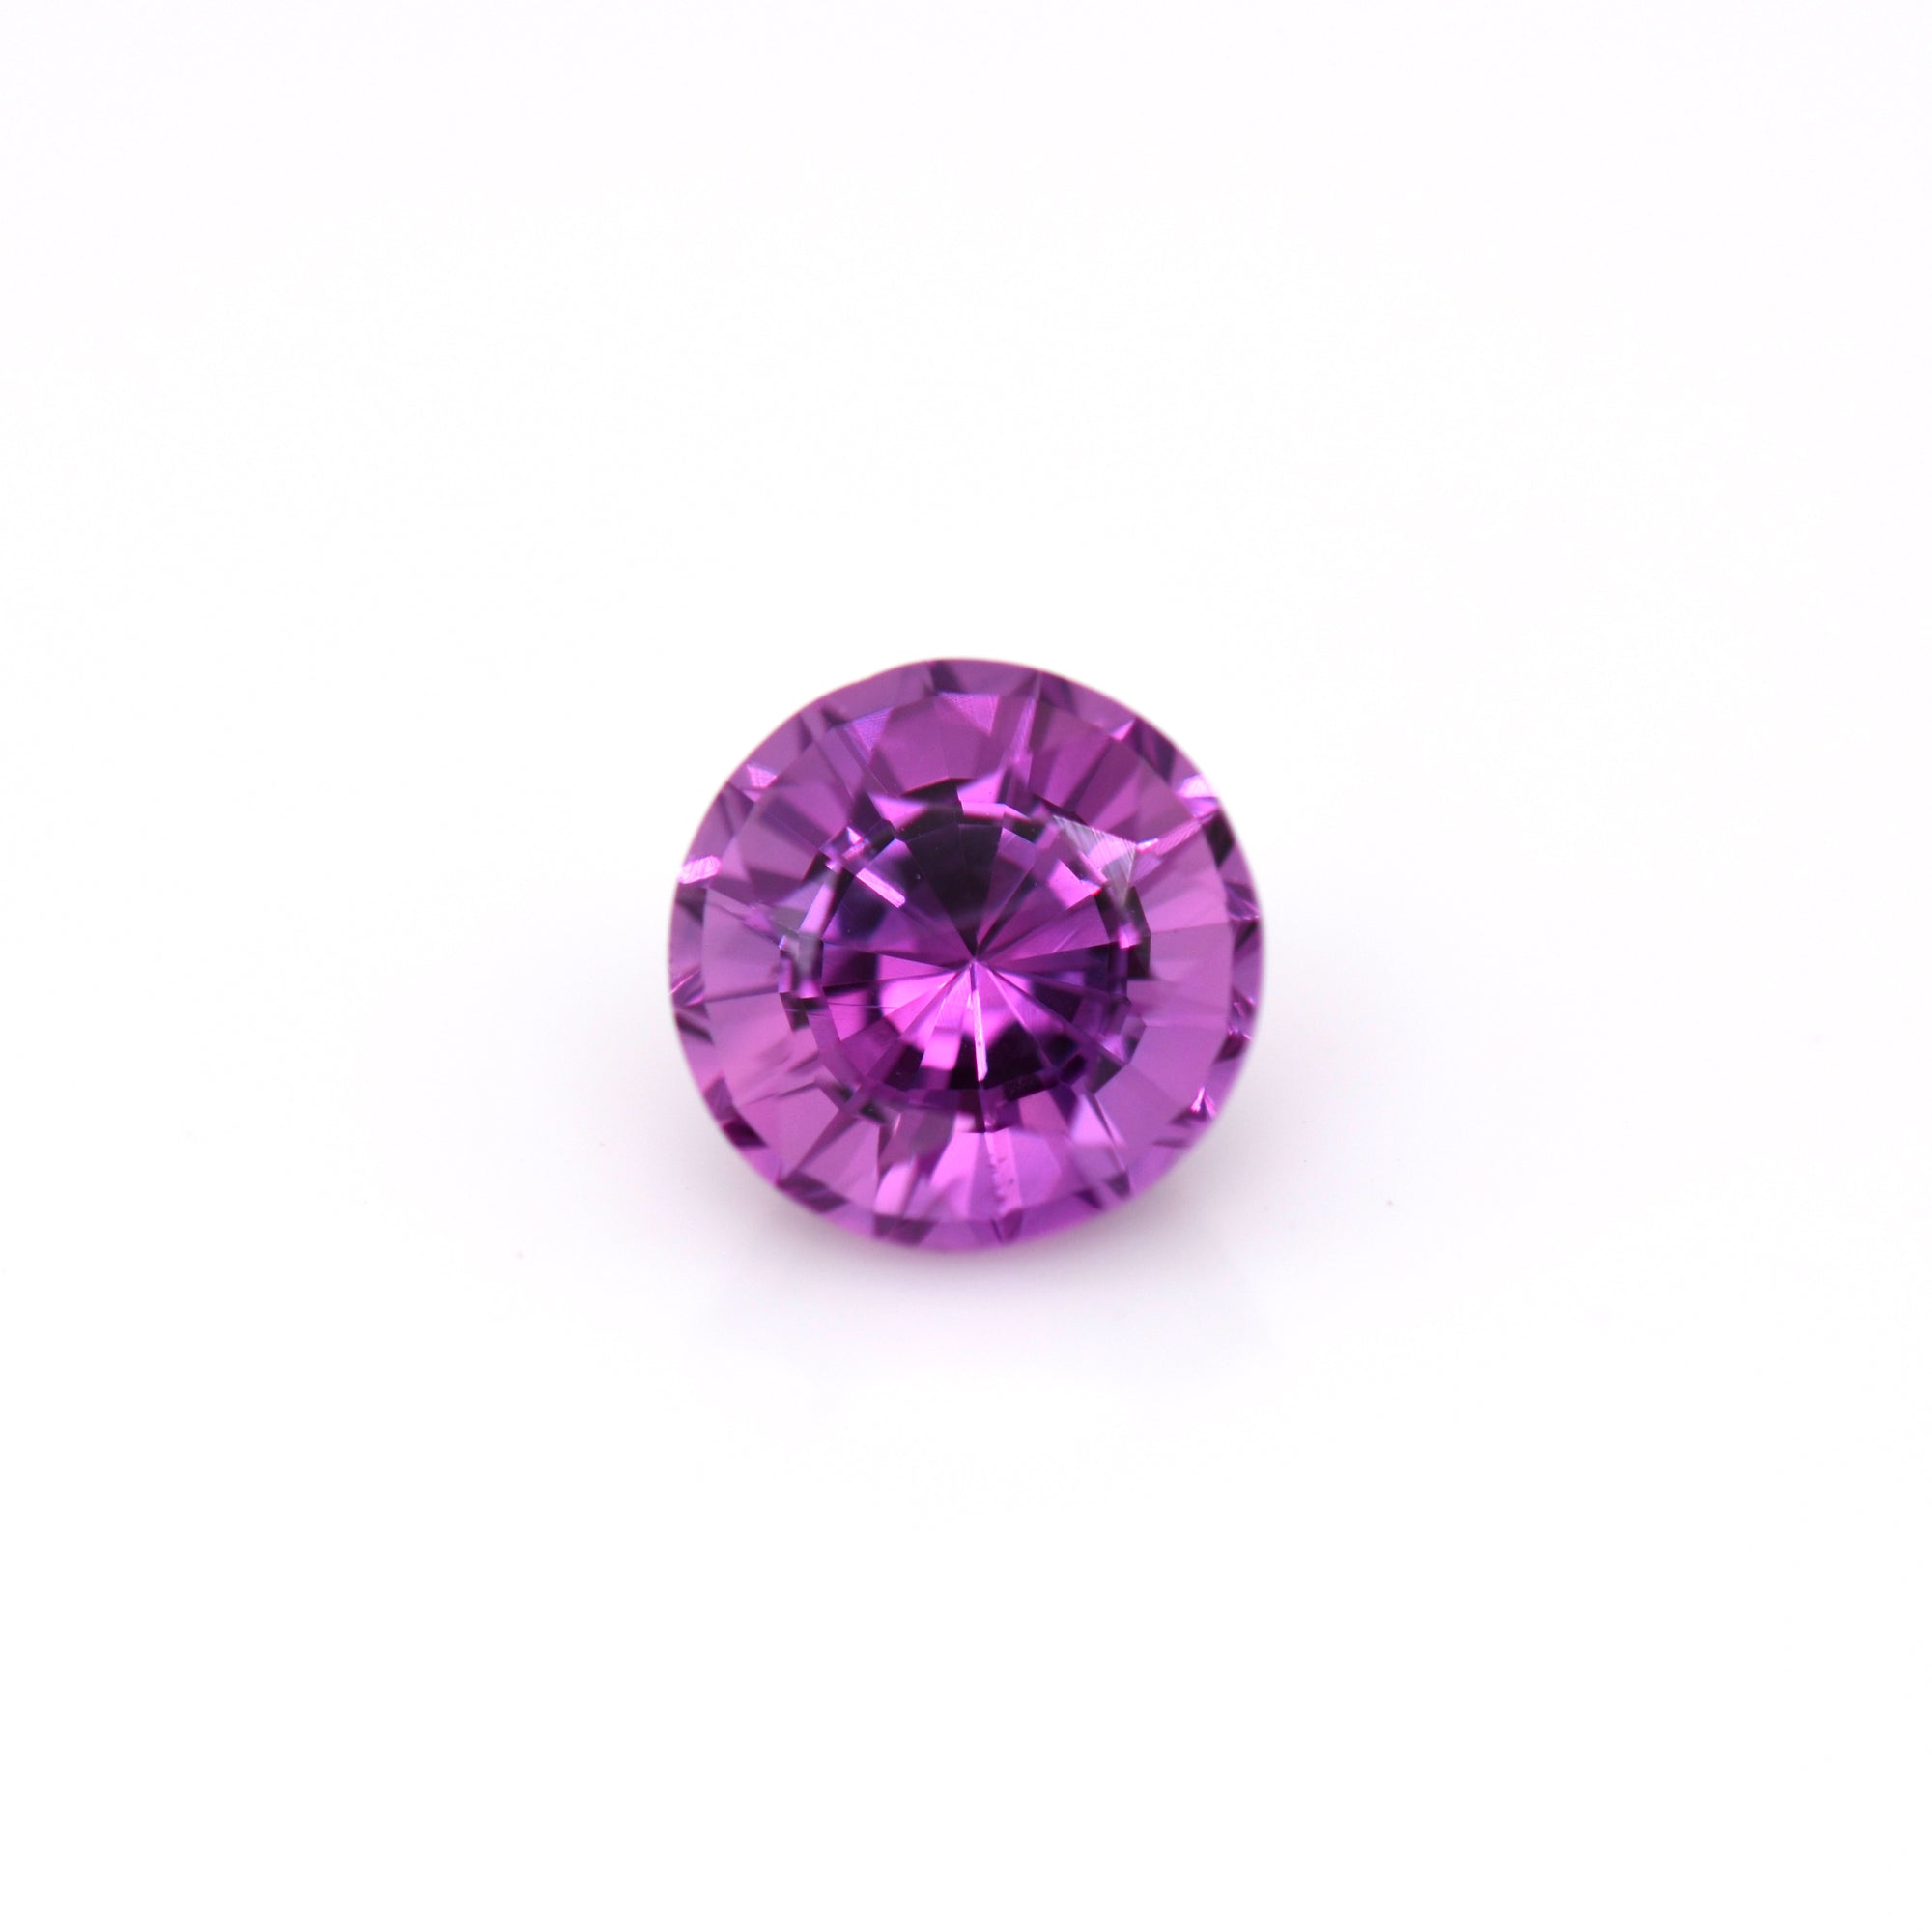 1.72 Carat Round Pinkish Purple Sapphire